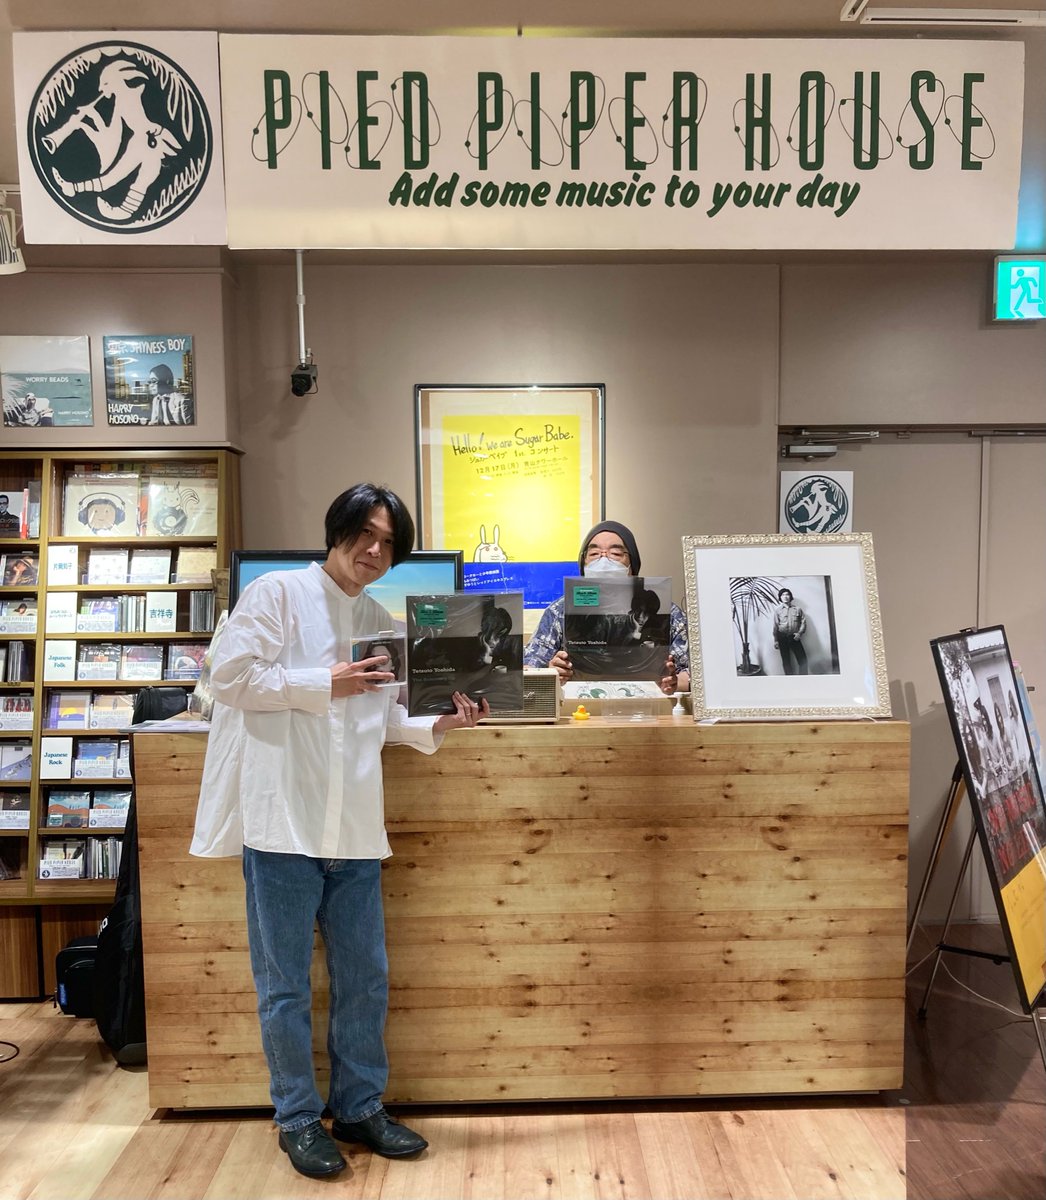 PiedPiperHouse tweet picture